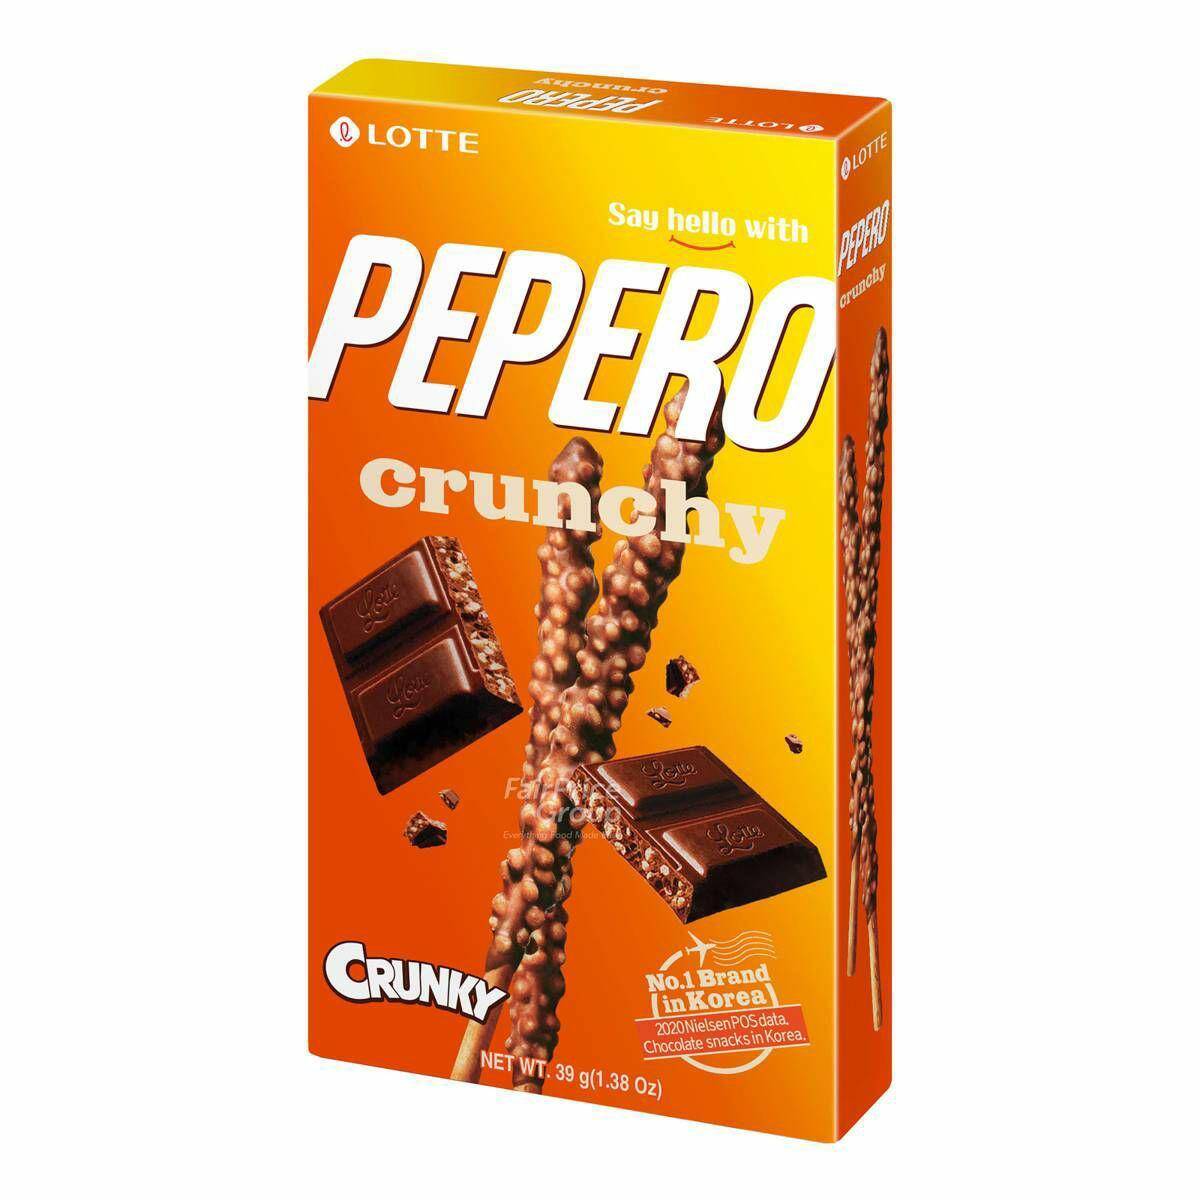 Pepero Crunchy 39g